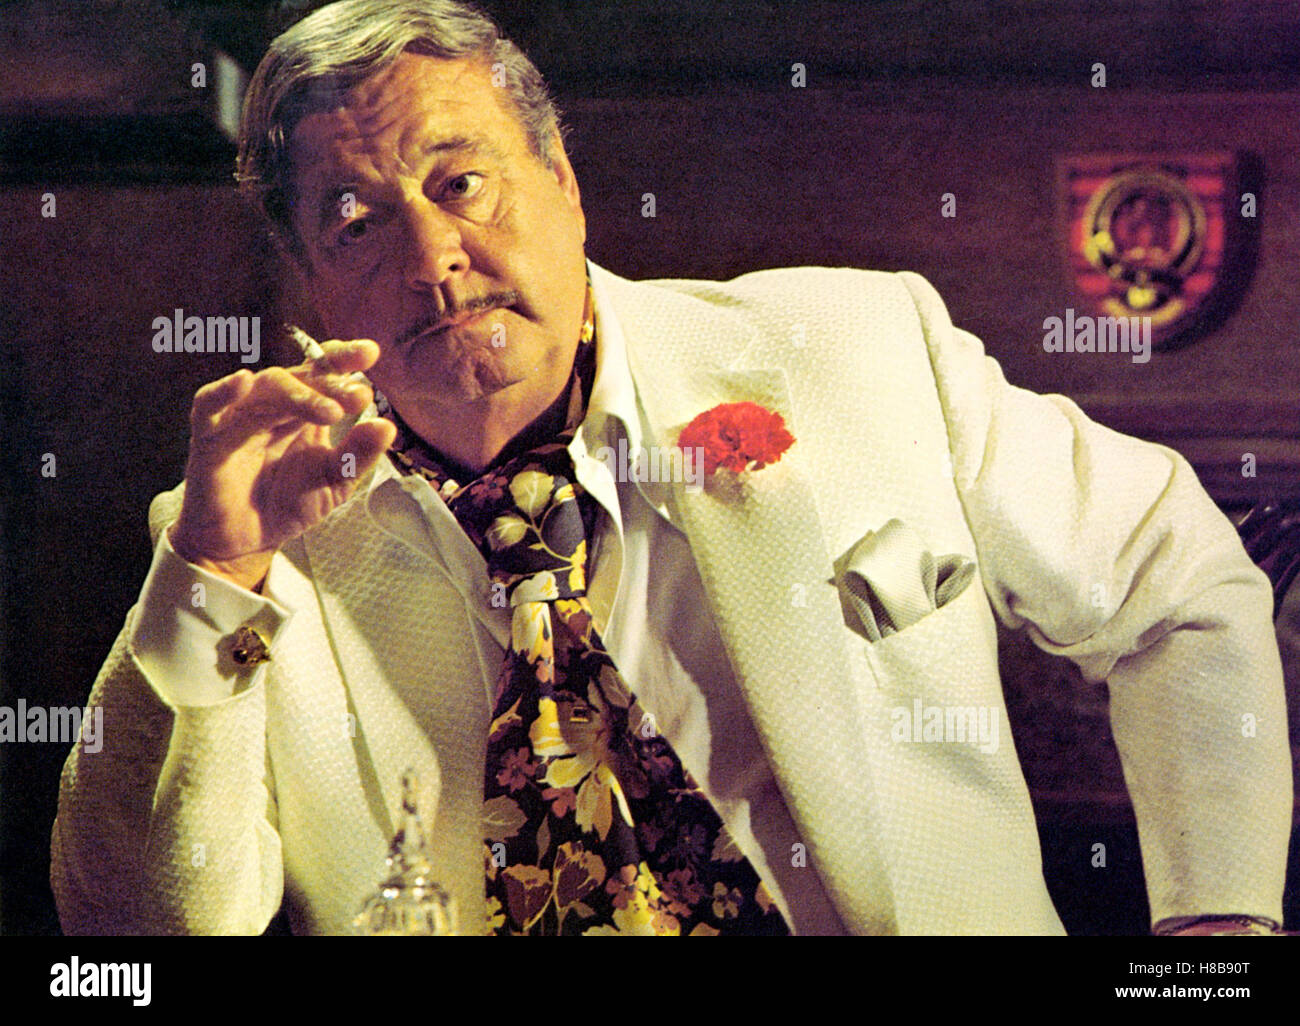 Mr. Billion, (MISTER BILLION) USA 1977, Regie: Jonathan Kaplan, JACKIE GLEASON, Key: Zigarette, Raucher Stock Photo